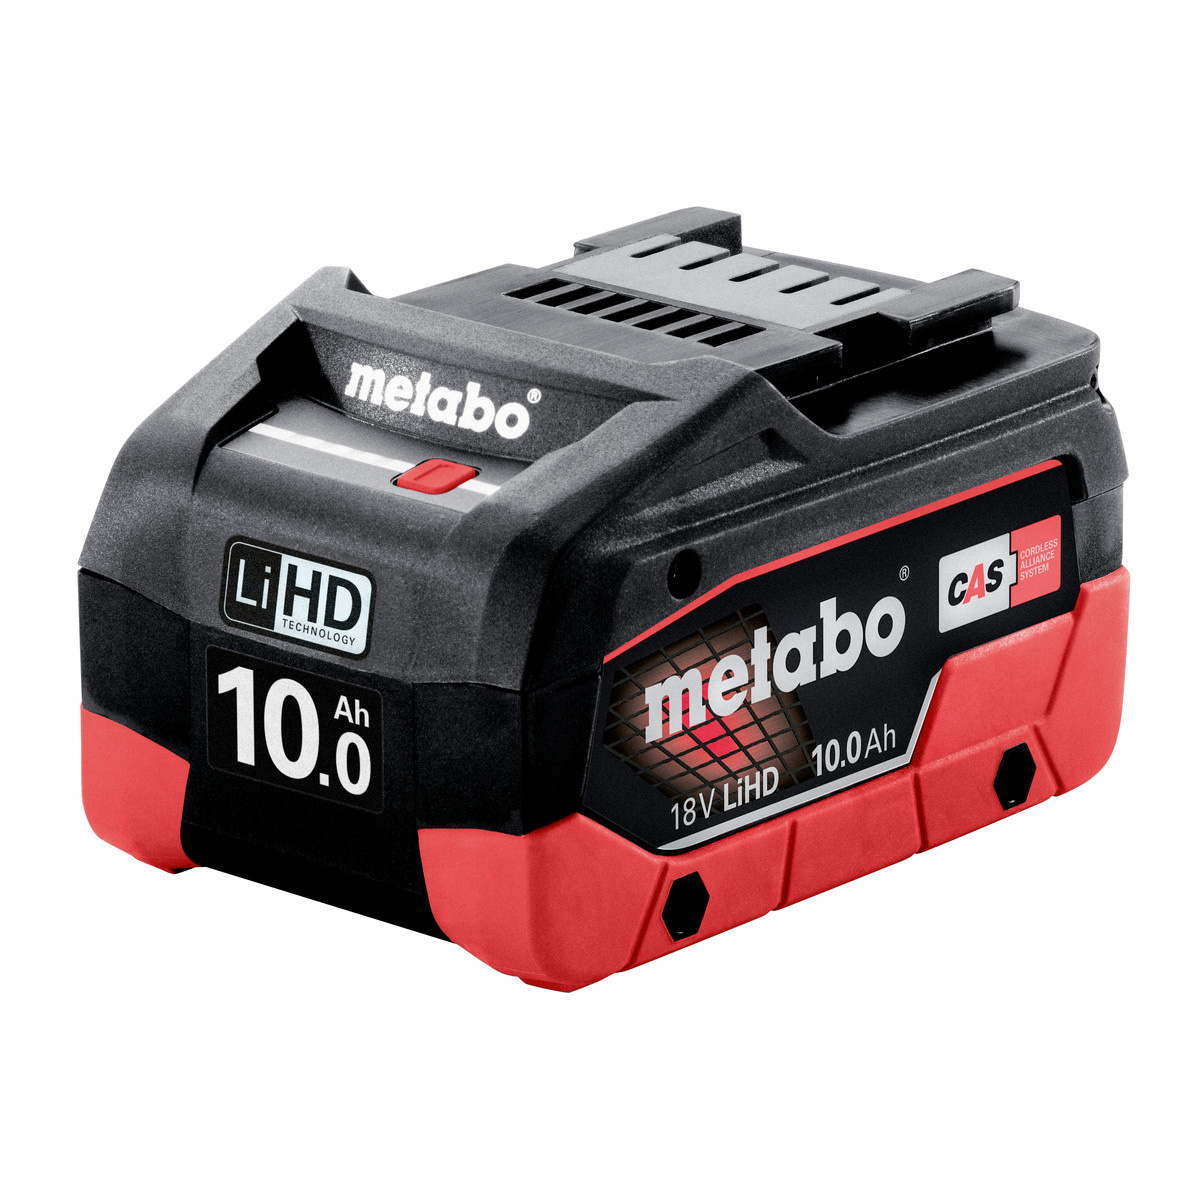 Metabo 18V 10.0ah LiHD Battery 625549000